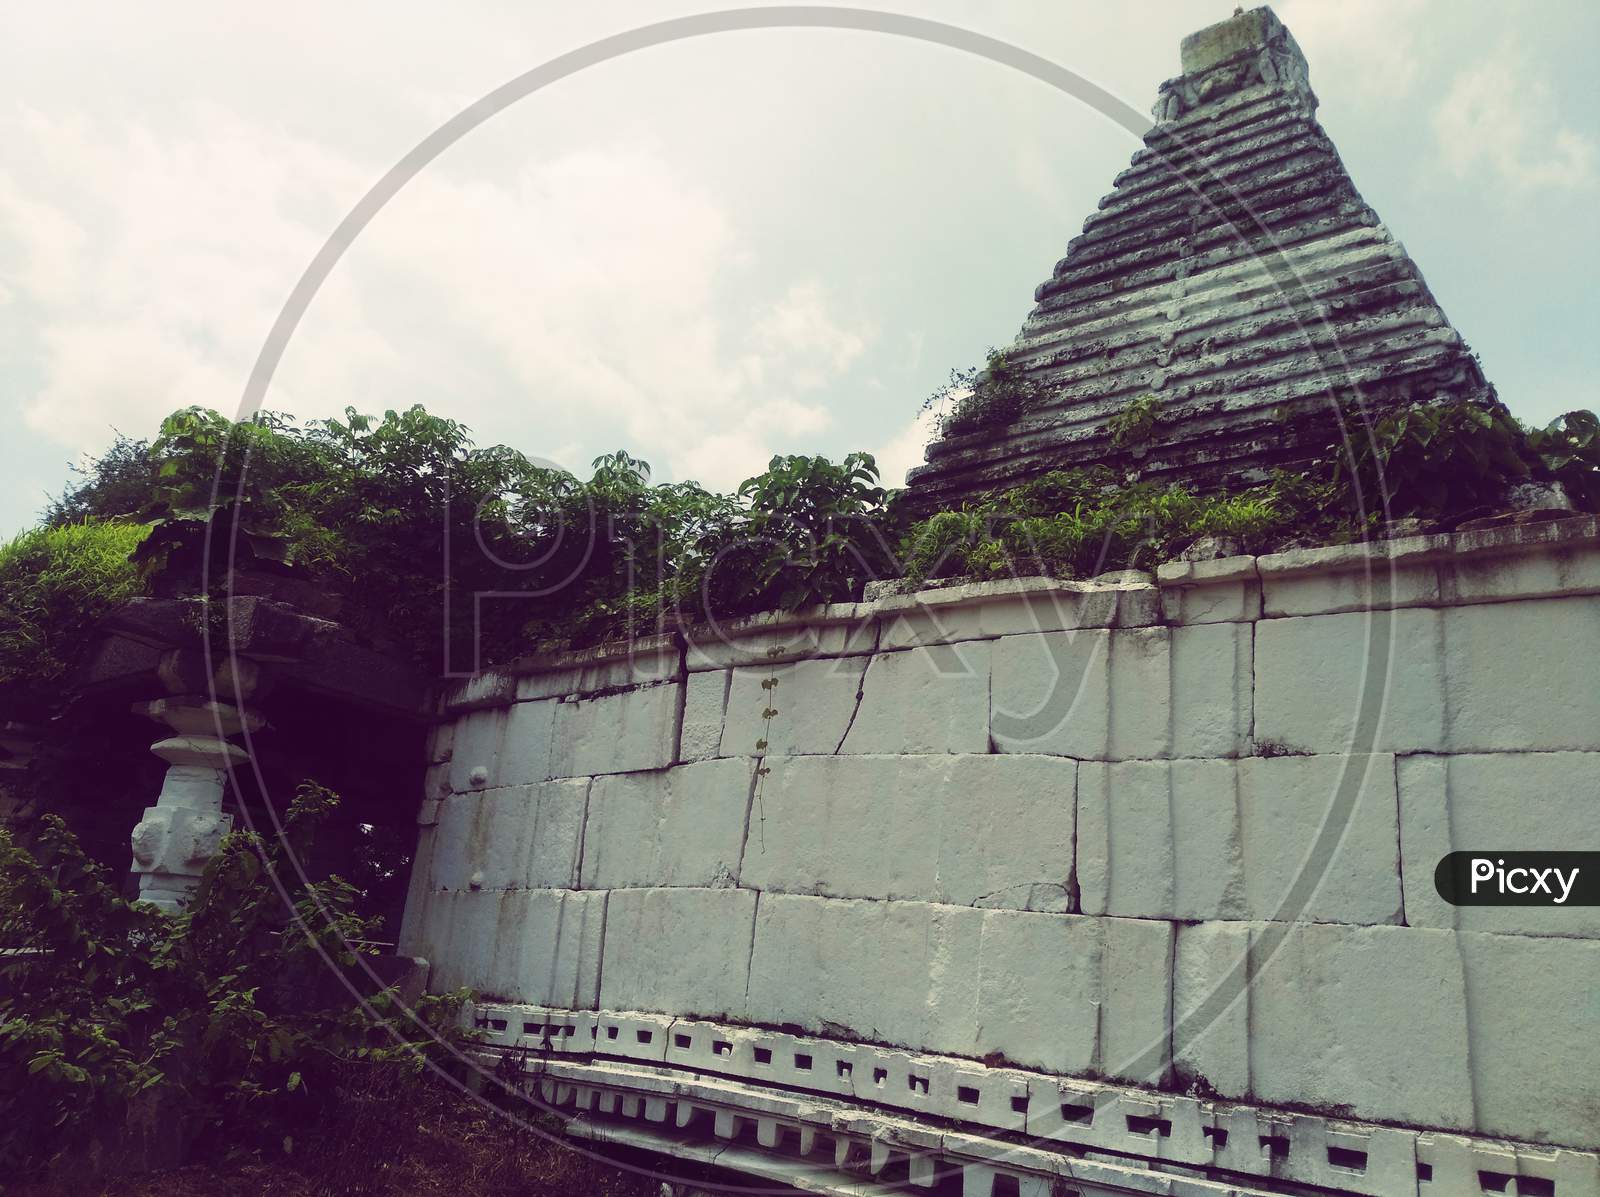 Lord shiva temple built in 13 century by Kakatiya dynasty